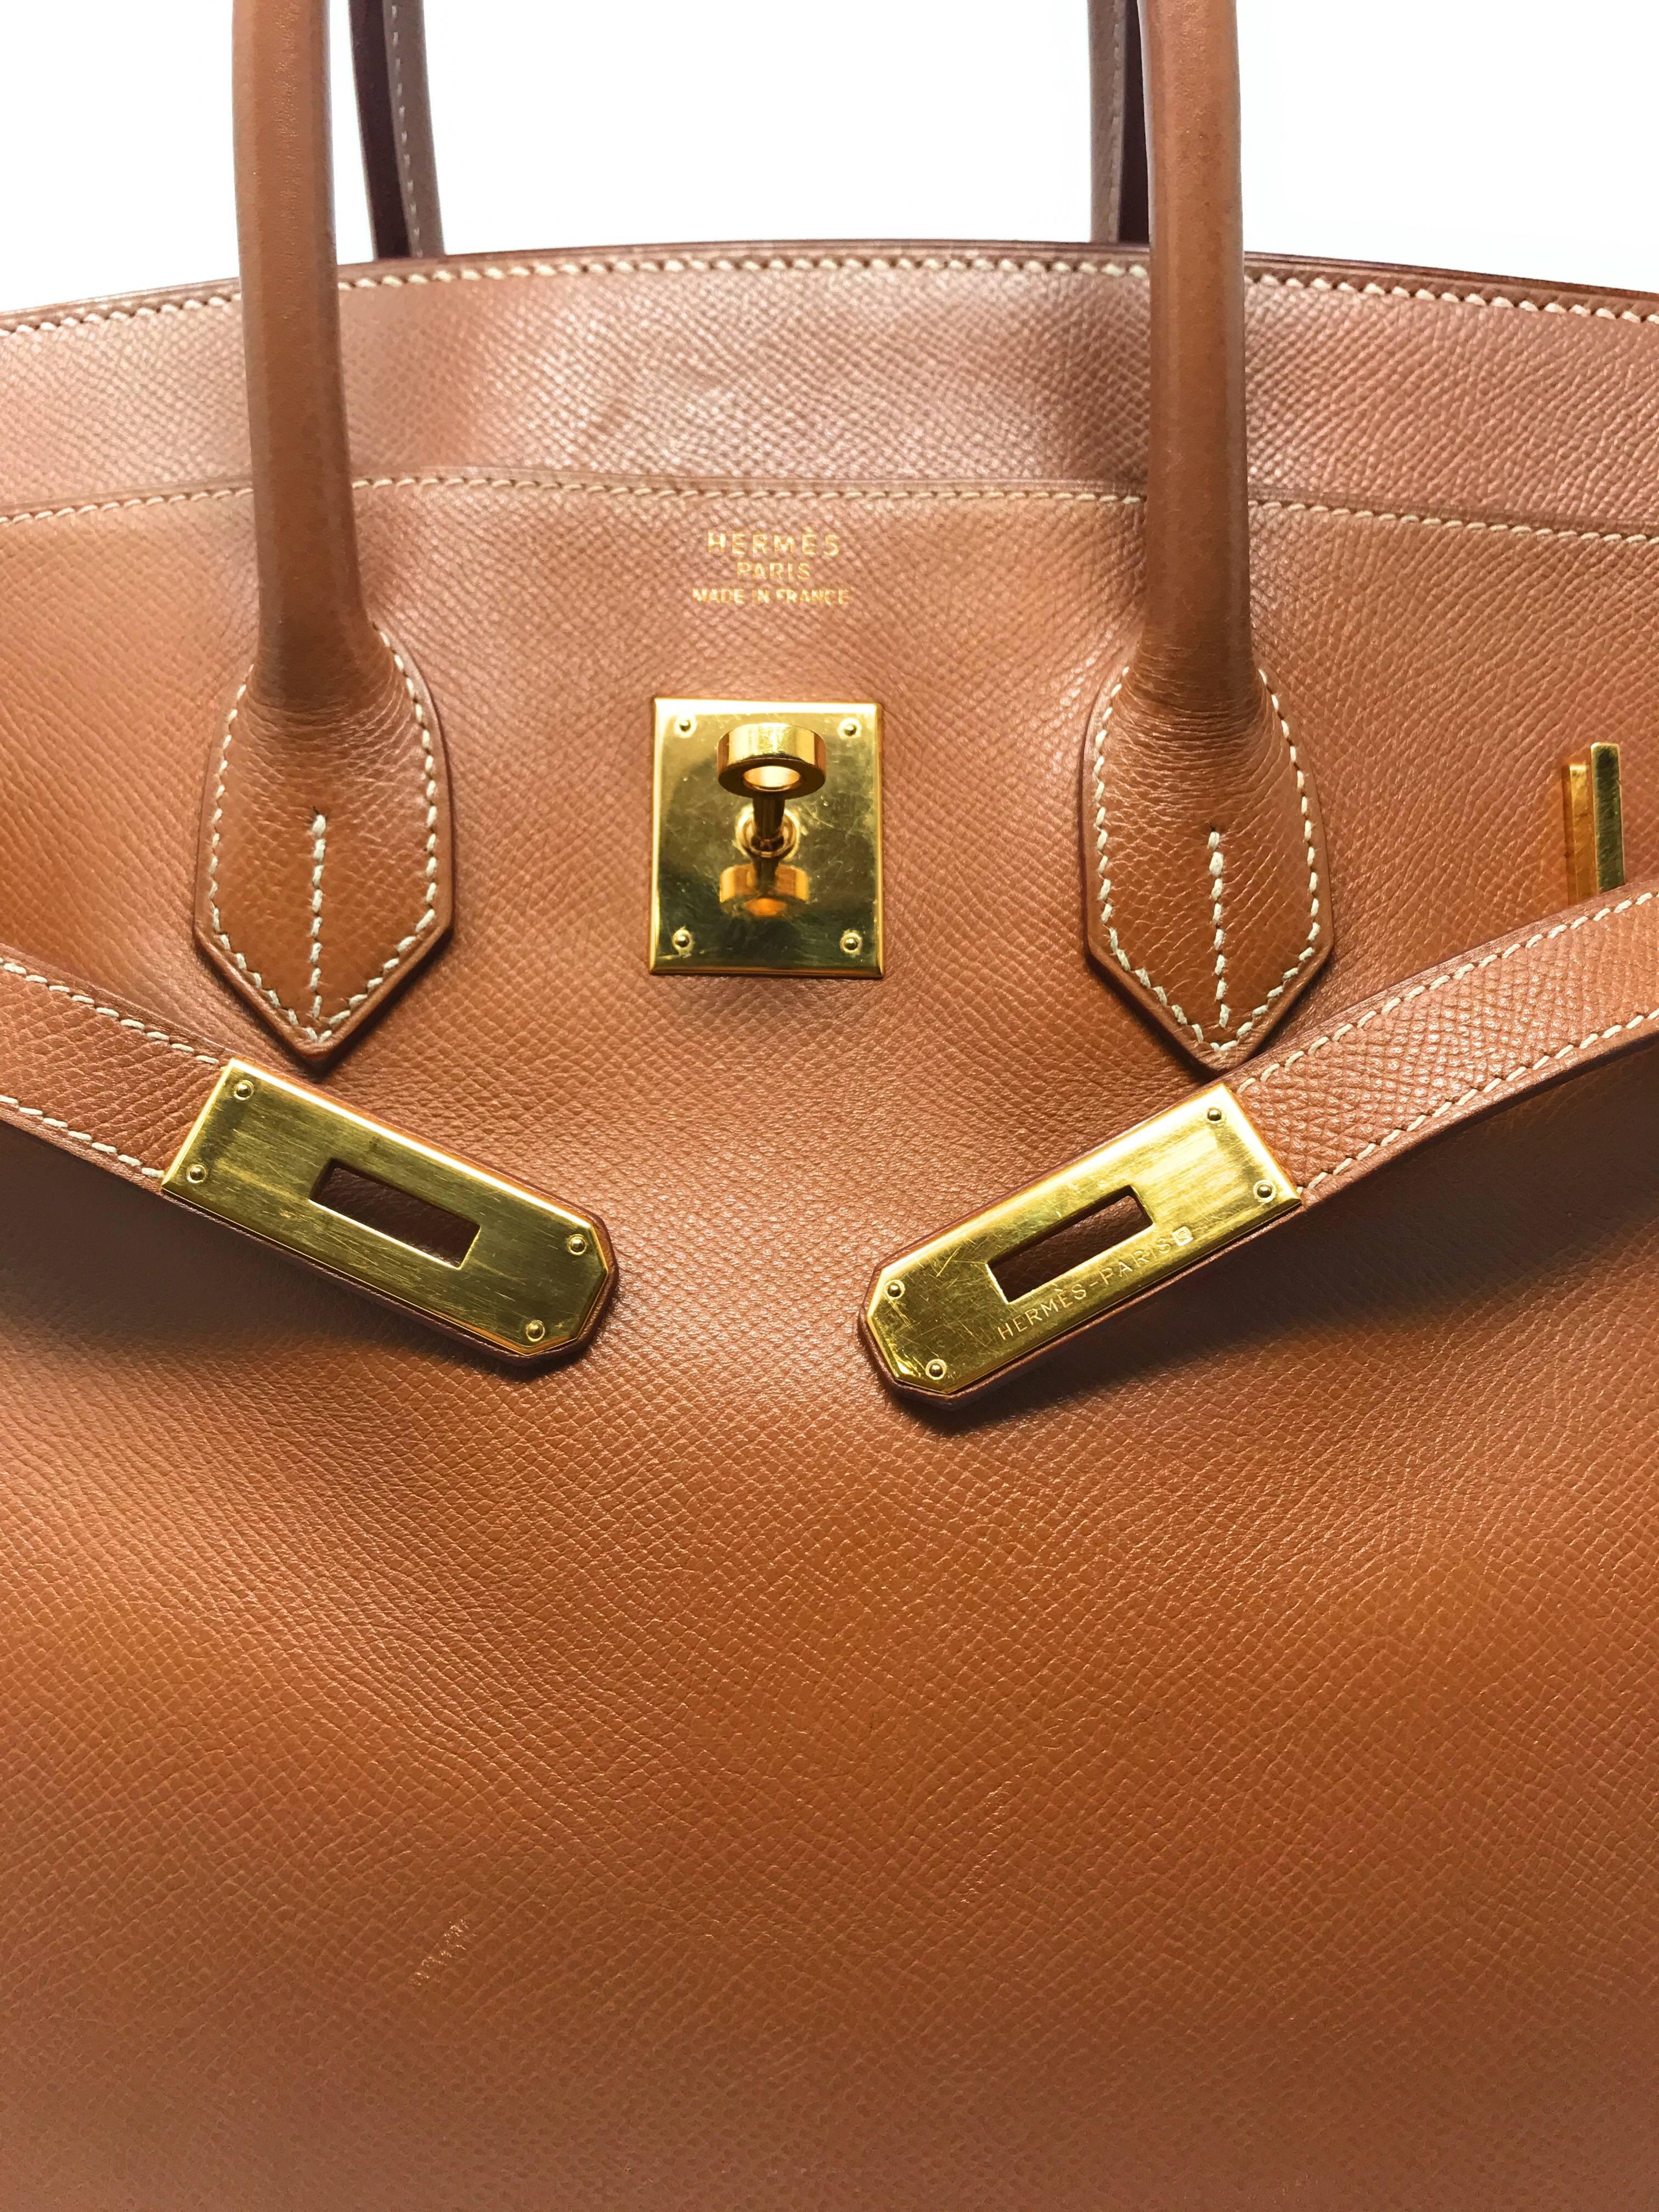 Women's or Men's Hermes Birkin 35cm Gold Bag For Sale